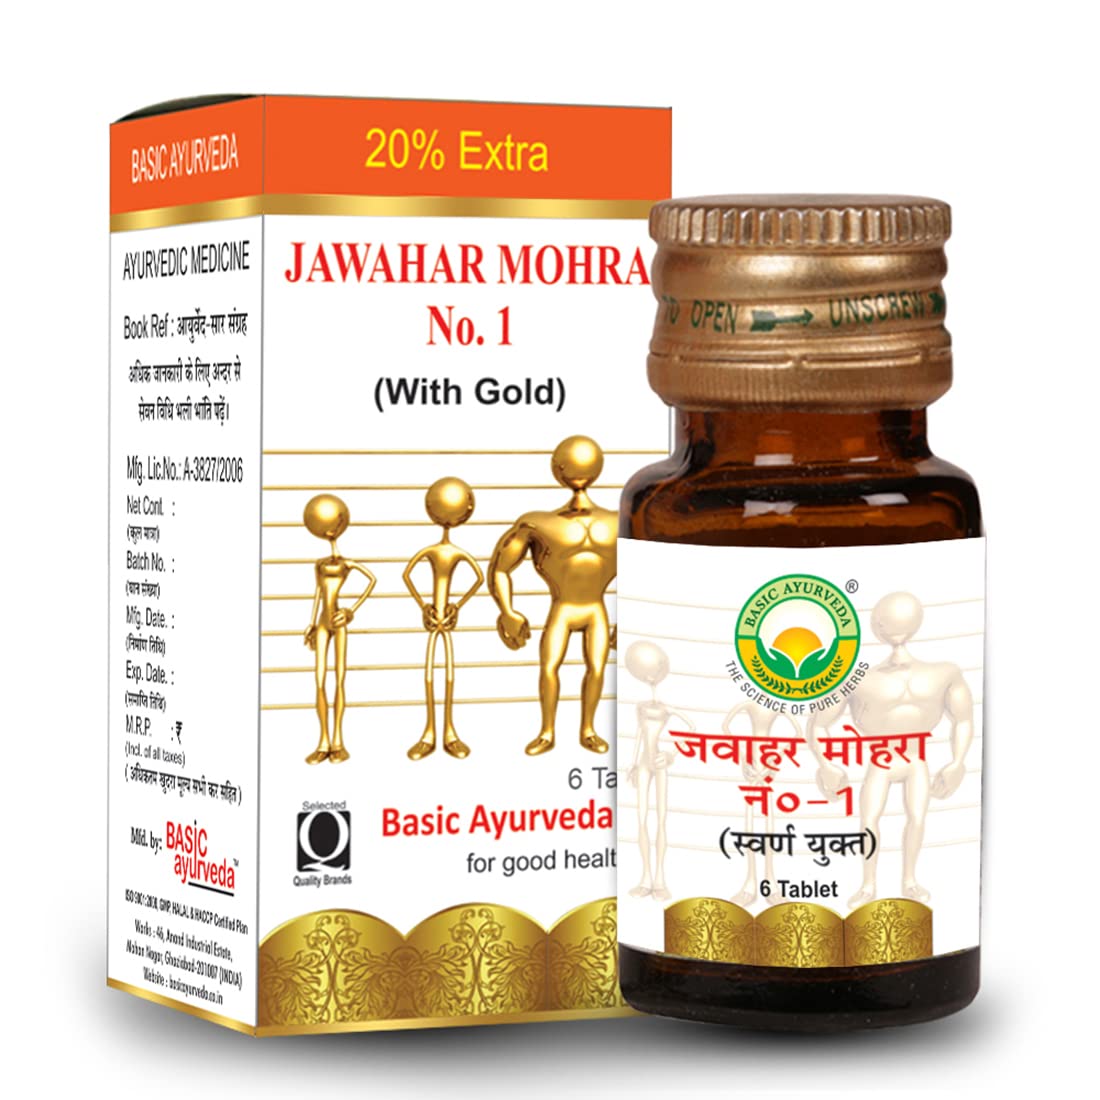 Basic Ayurveda Jawahar Mohra No.1 With Gold Tablet - 6 Tabs